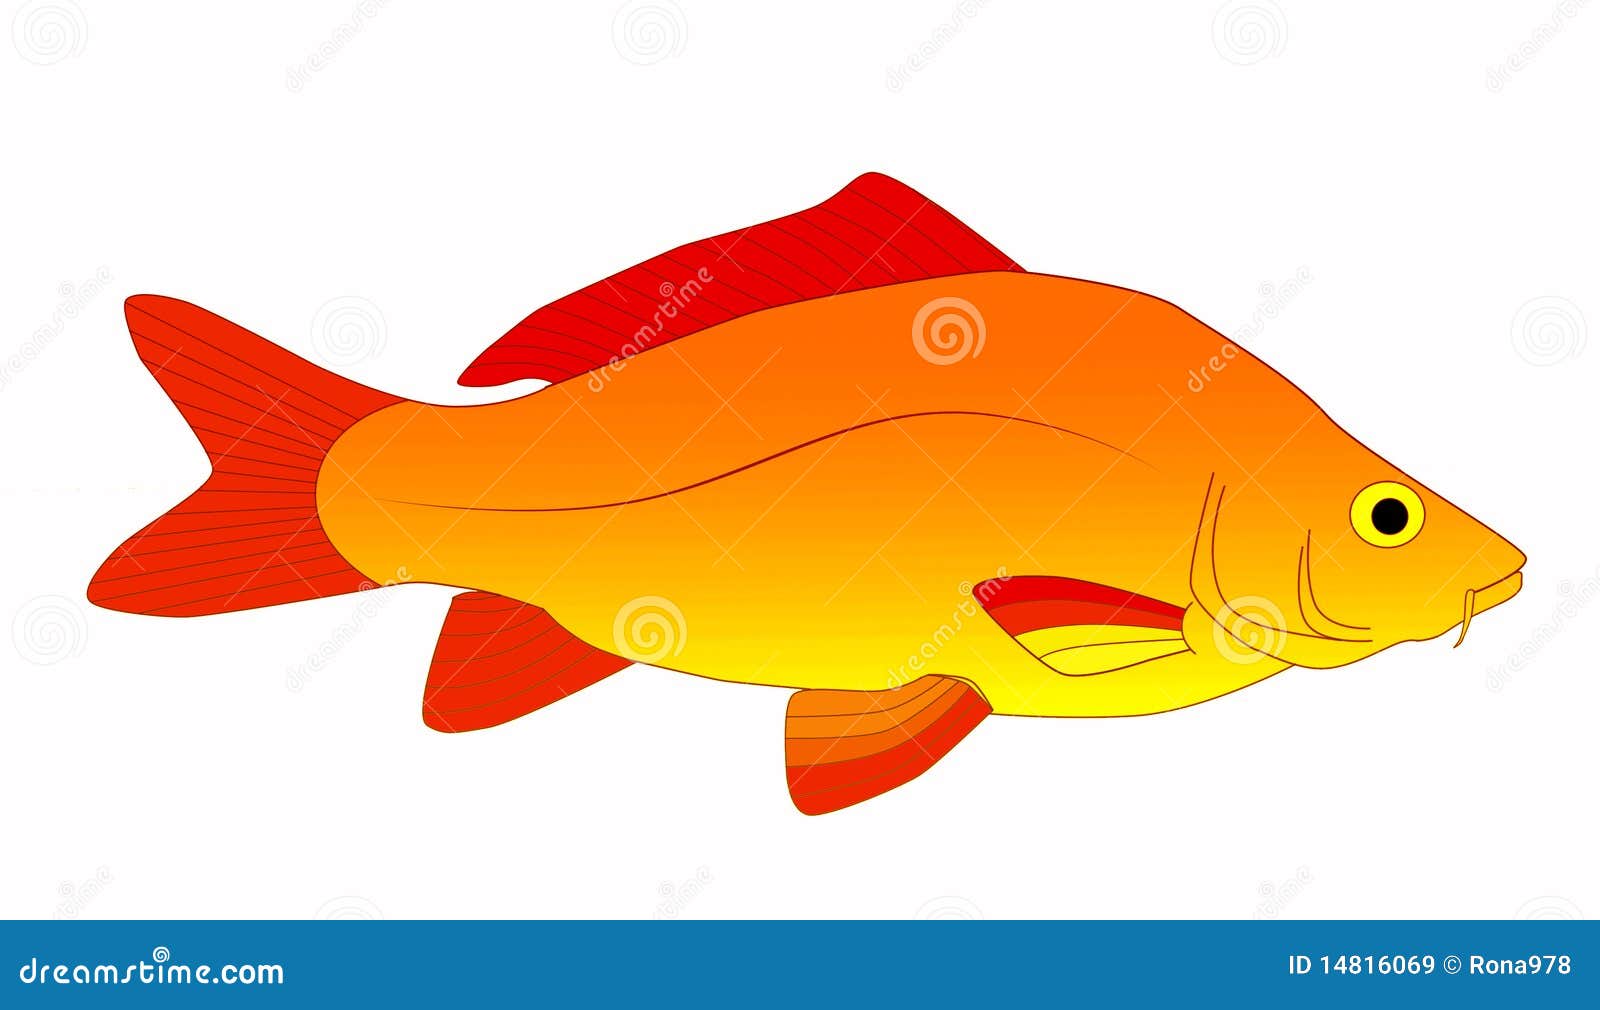 carp fish clip art free - photo #7